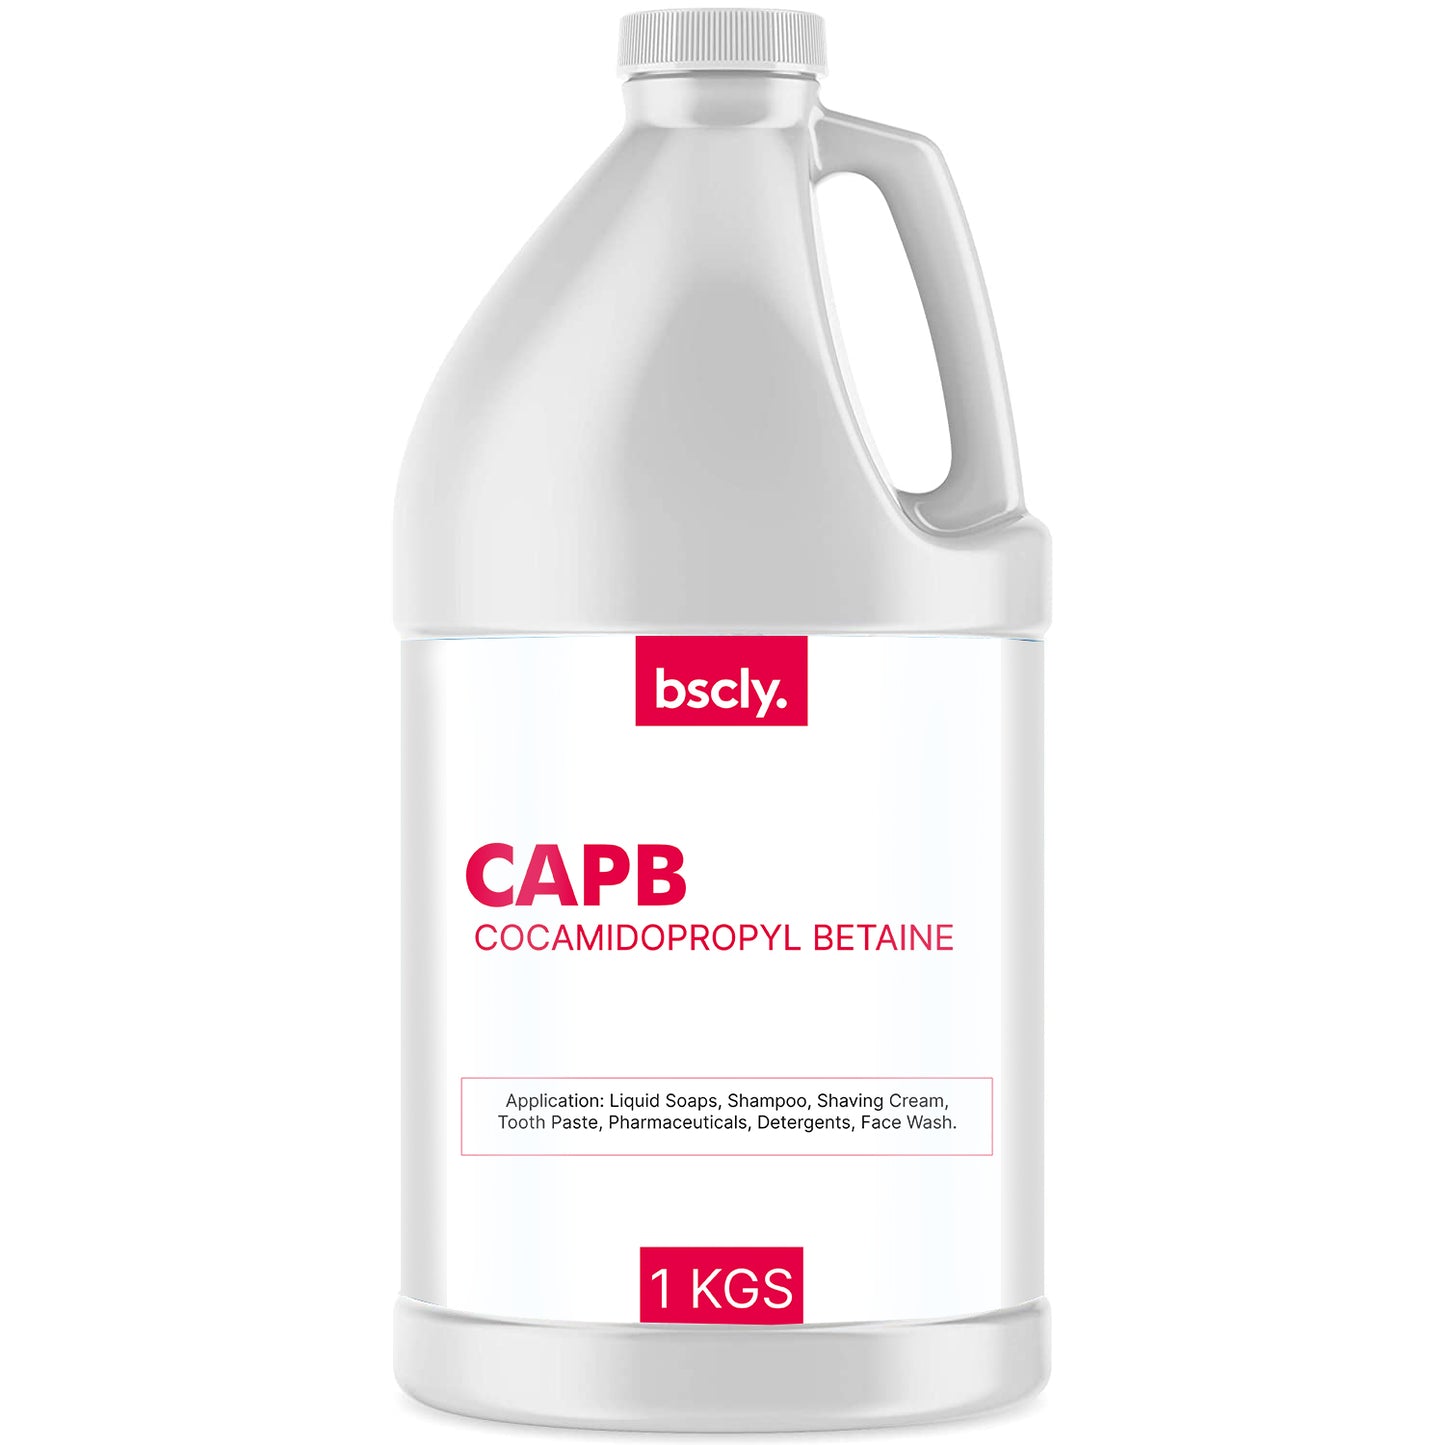 CAPB | Cocamidopropyl Betaine